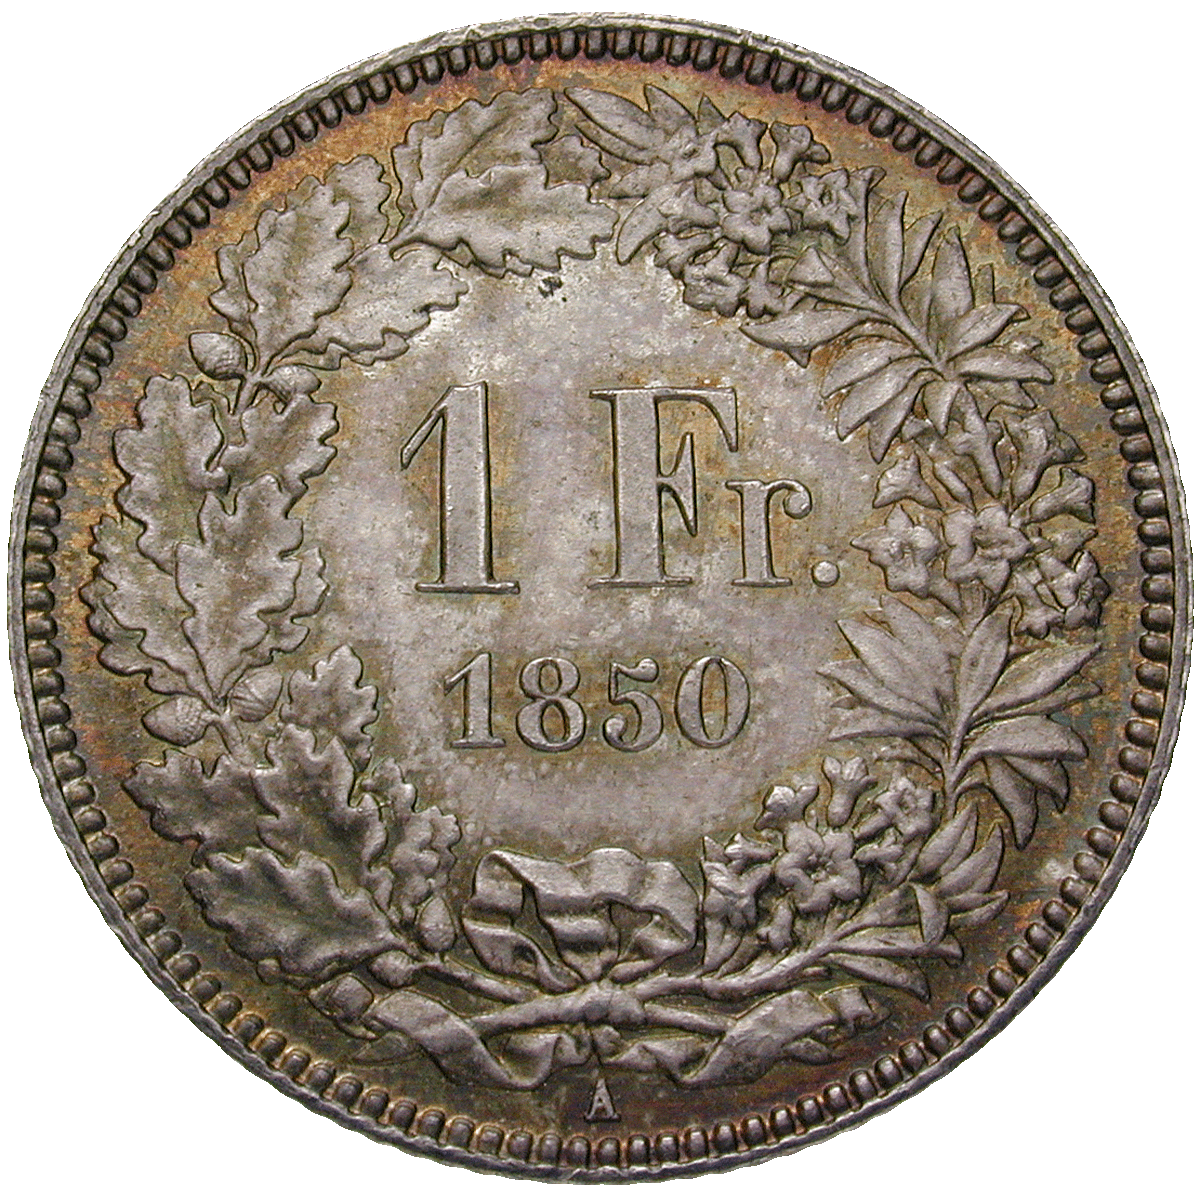 Schweizerische Eidgenossenschaft, 1 Franken 1850 (reverse)